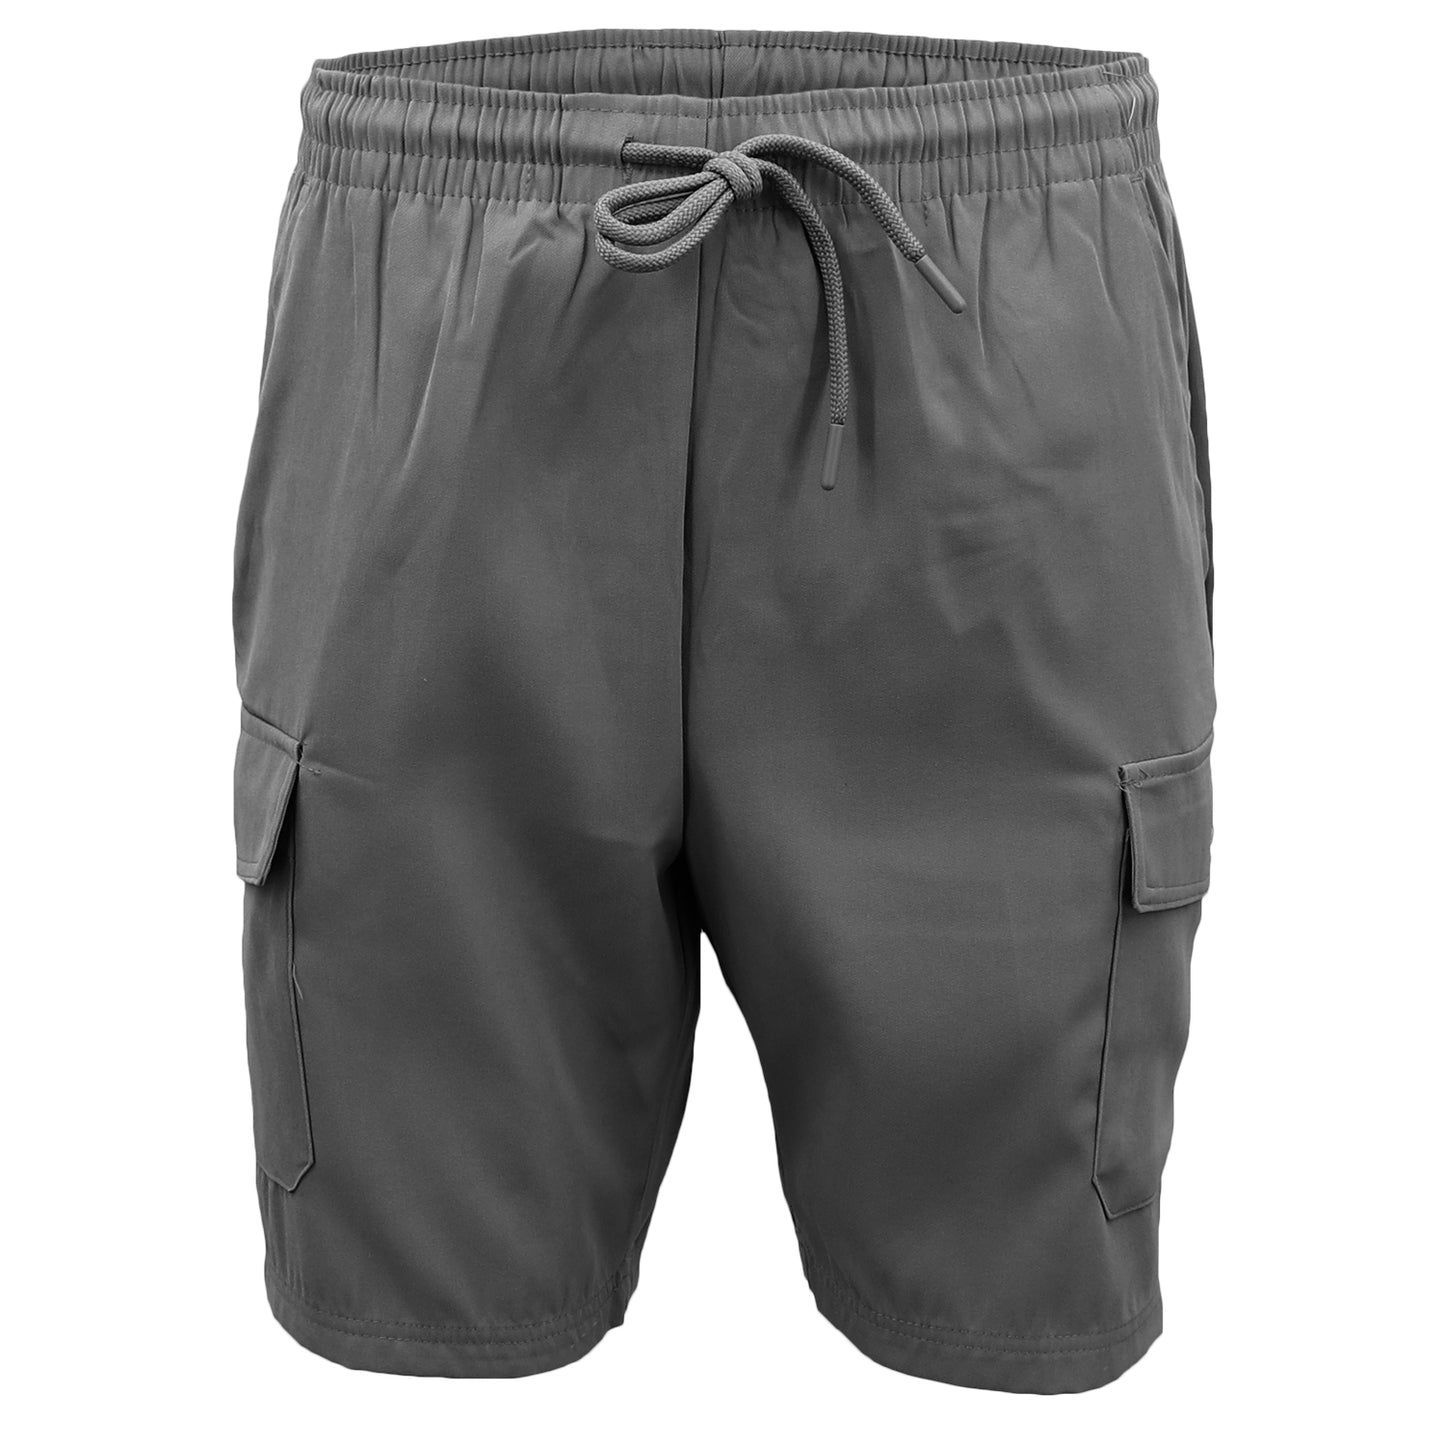 Men's Cargo Shorts 4 Pockets Cascual Work Trousers Active Pants Elastic Waist, Navy, XL